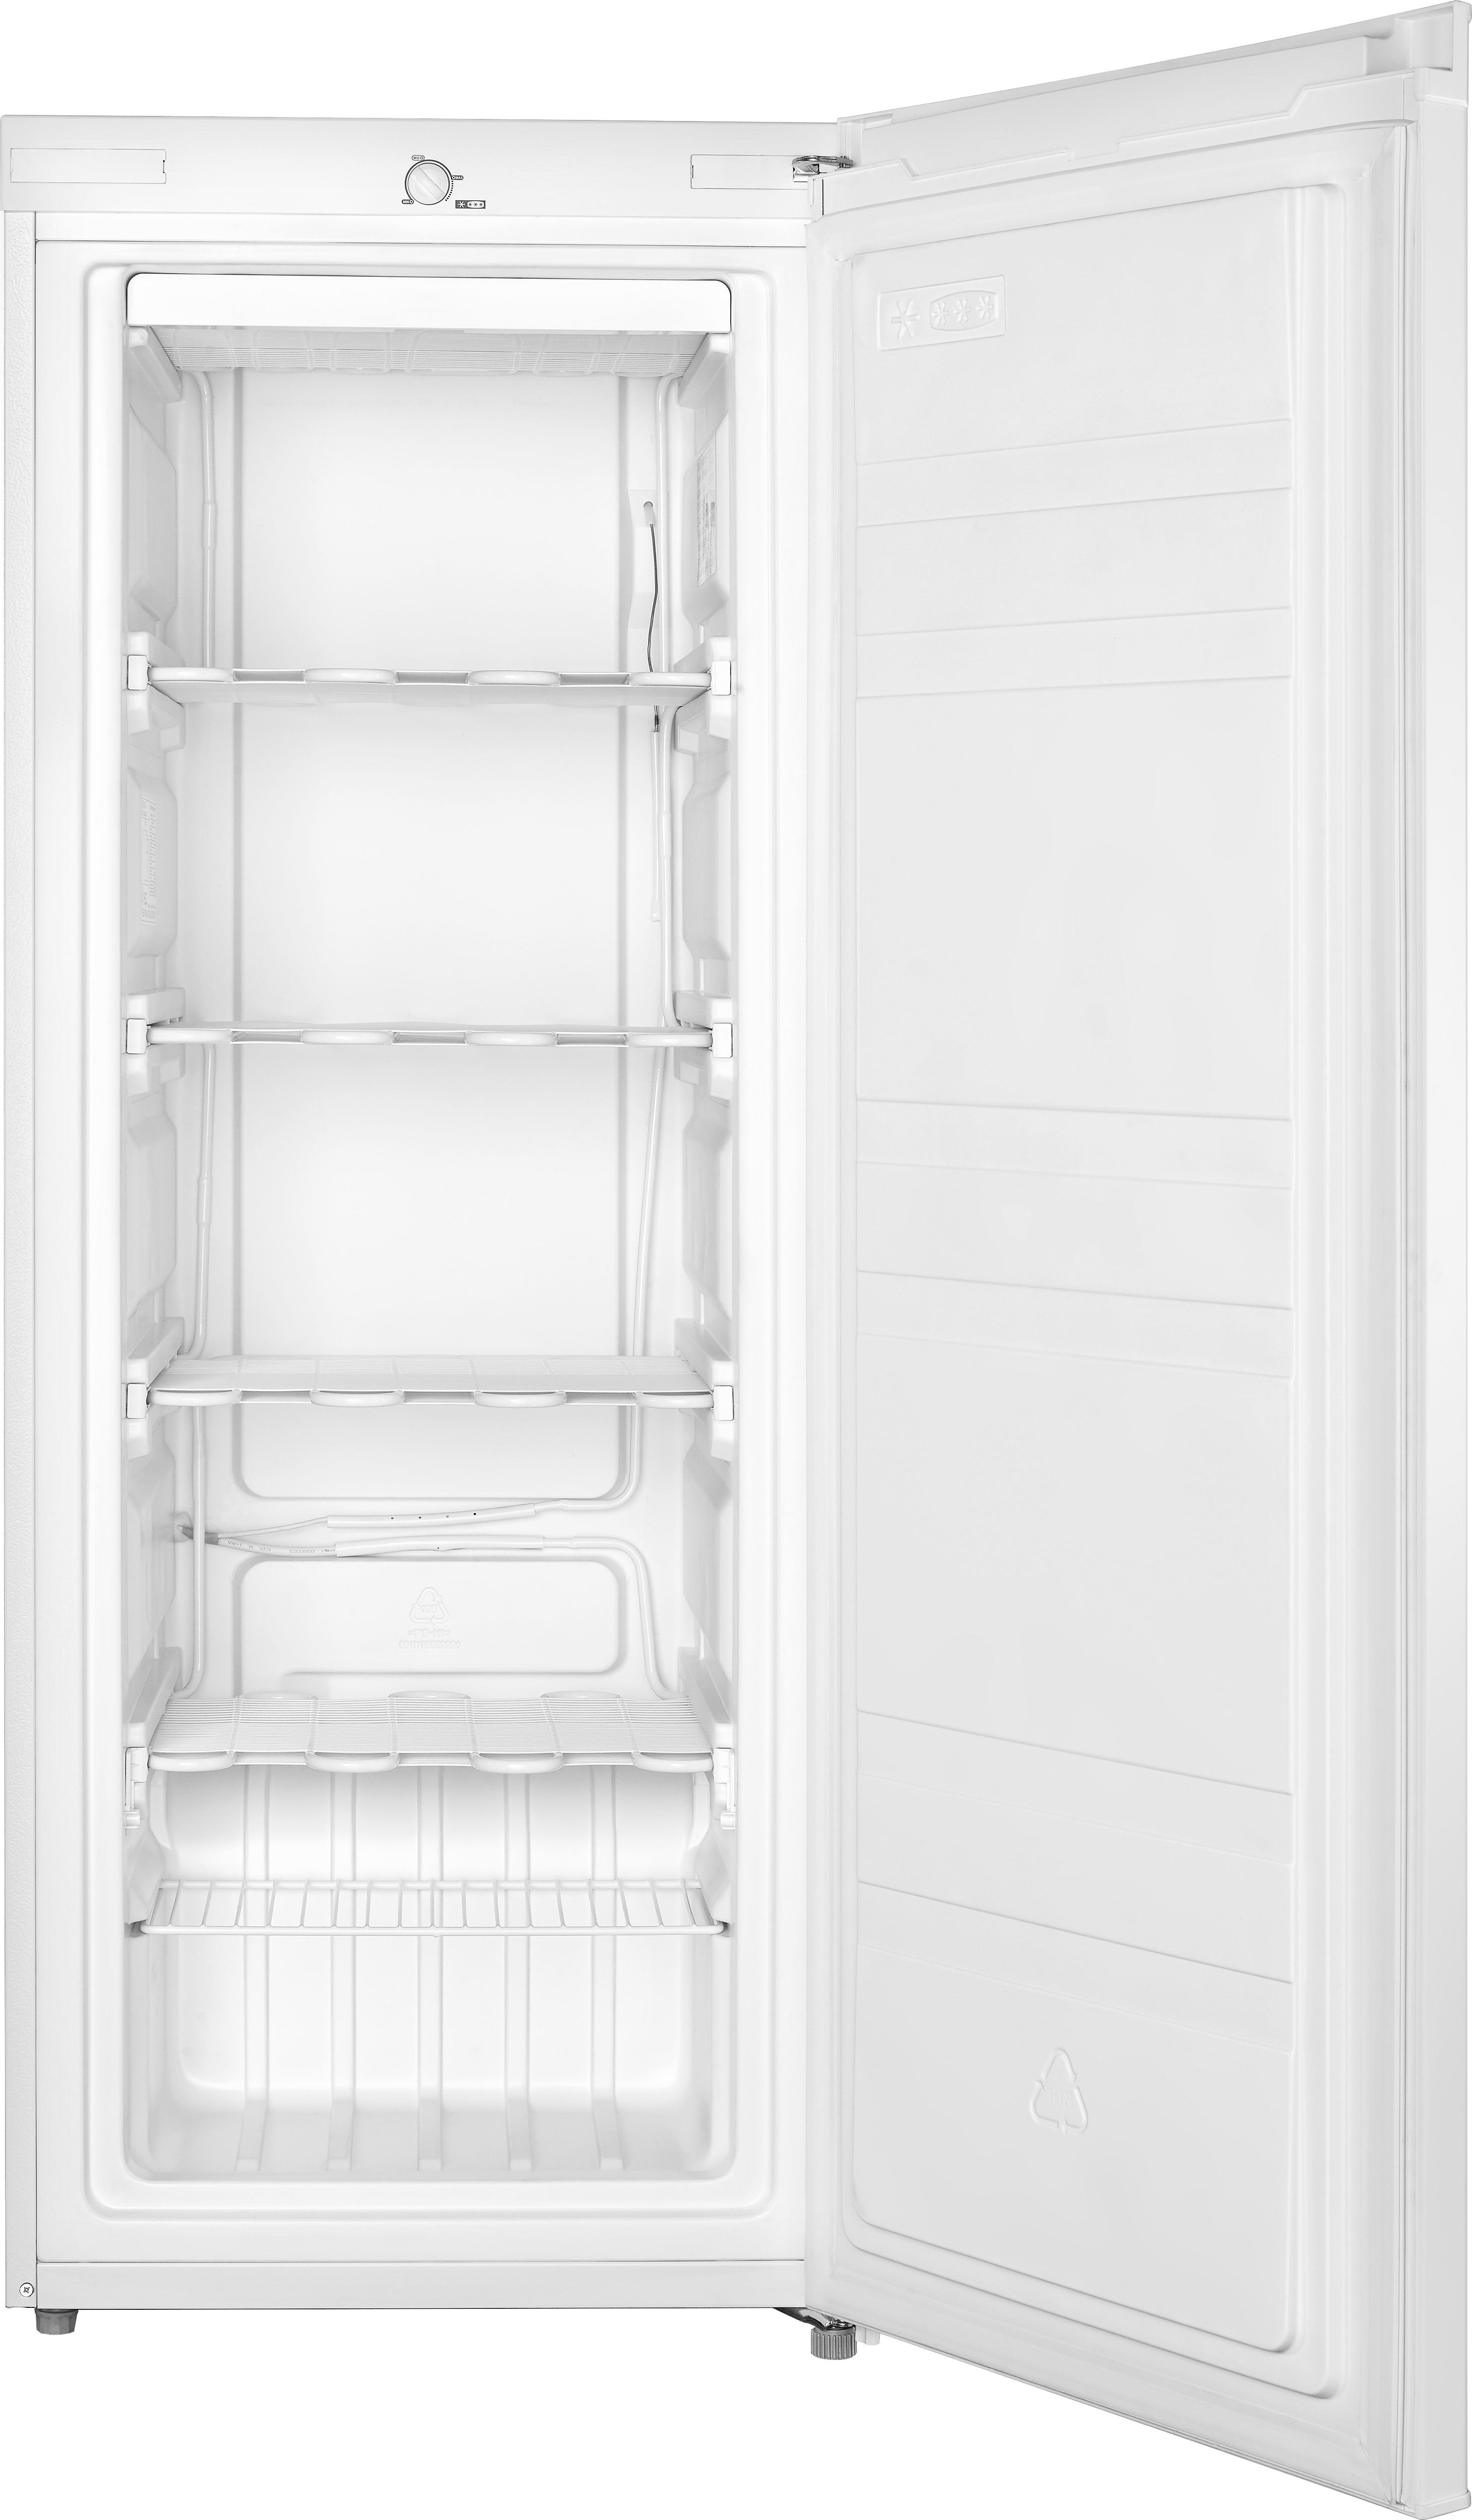 Freezer Handle Soft Trunk 🧳🥶 : Louisvuitton